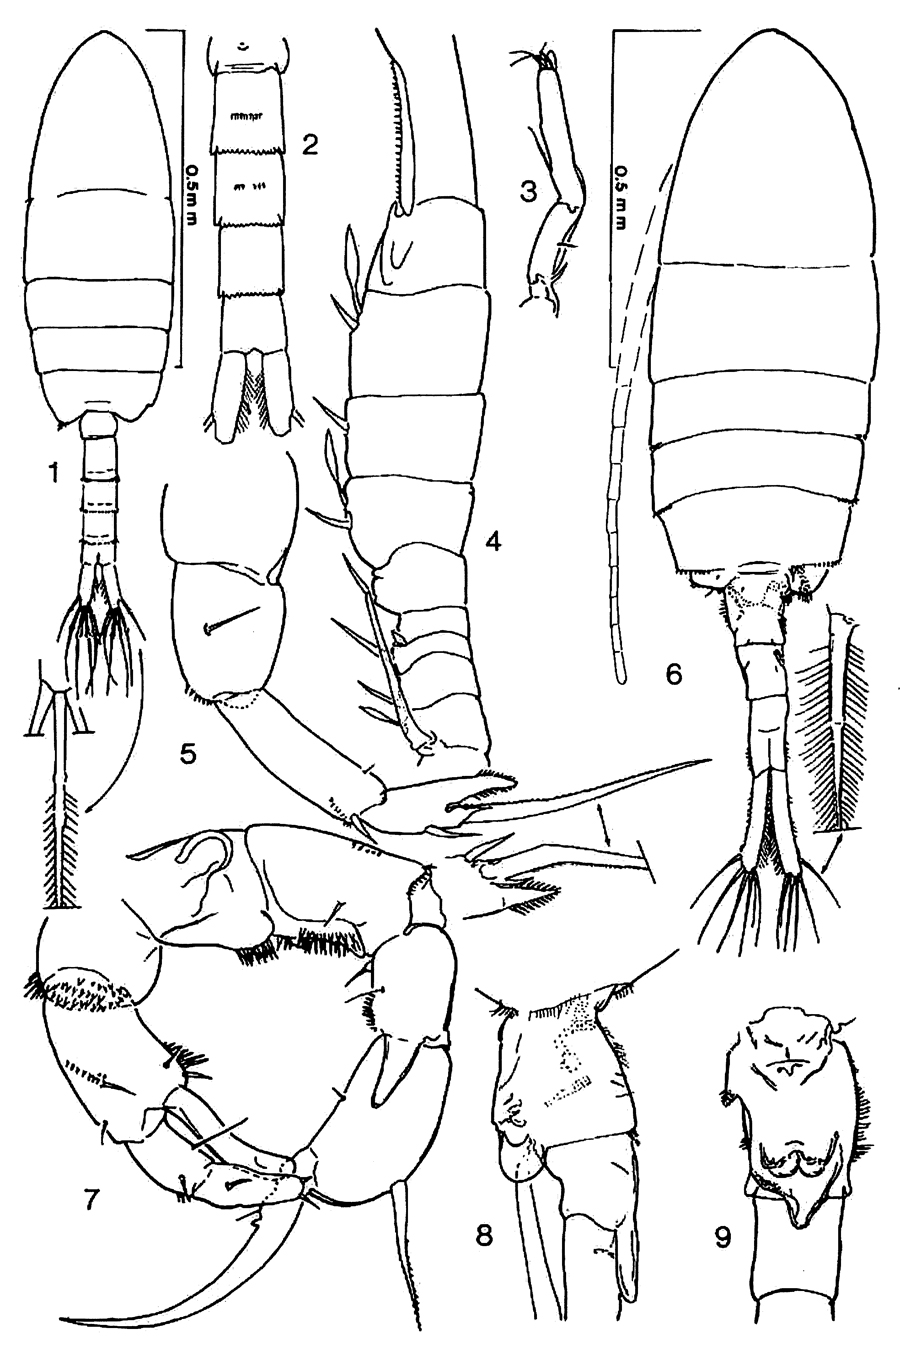 Species Pseudodiaptomus marshi - Plate 4 of morphological figures